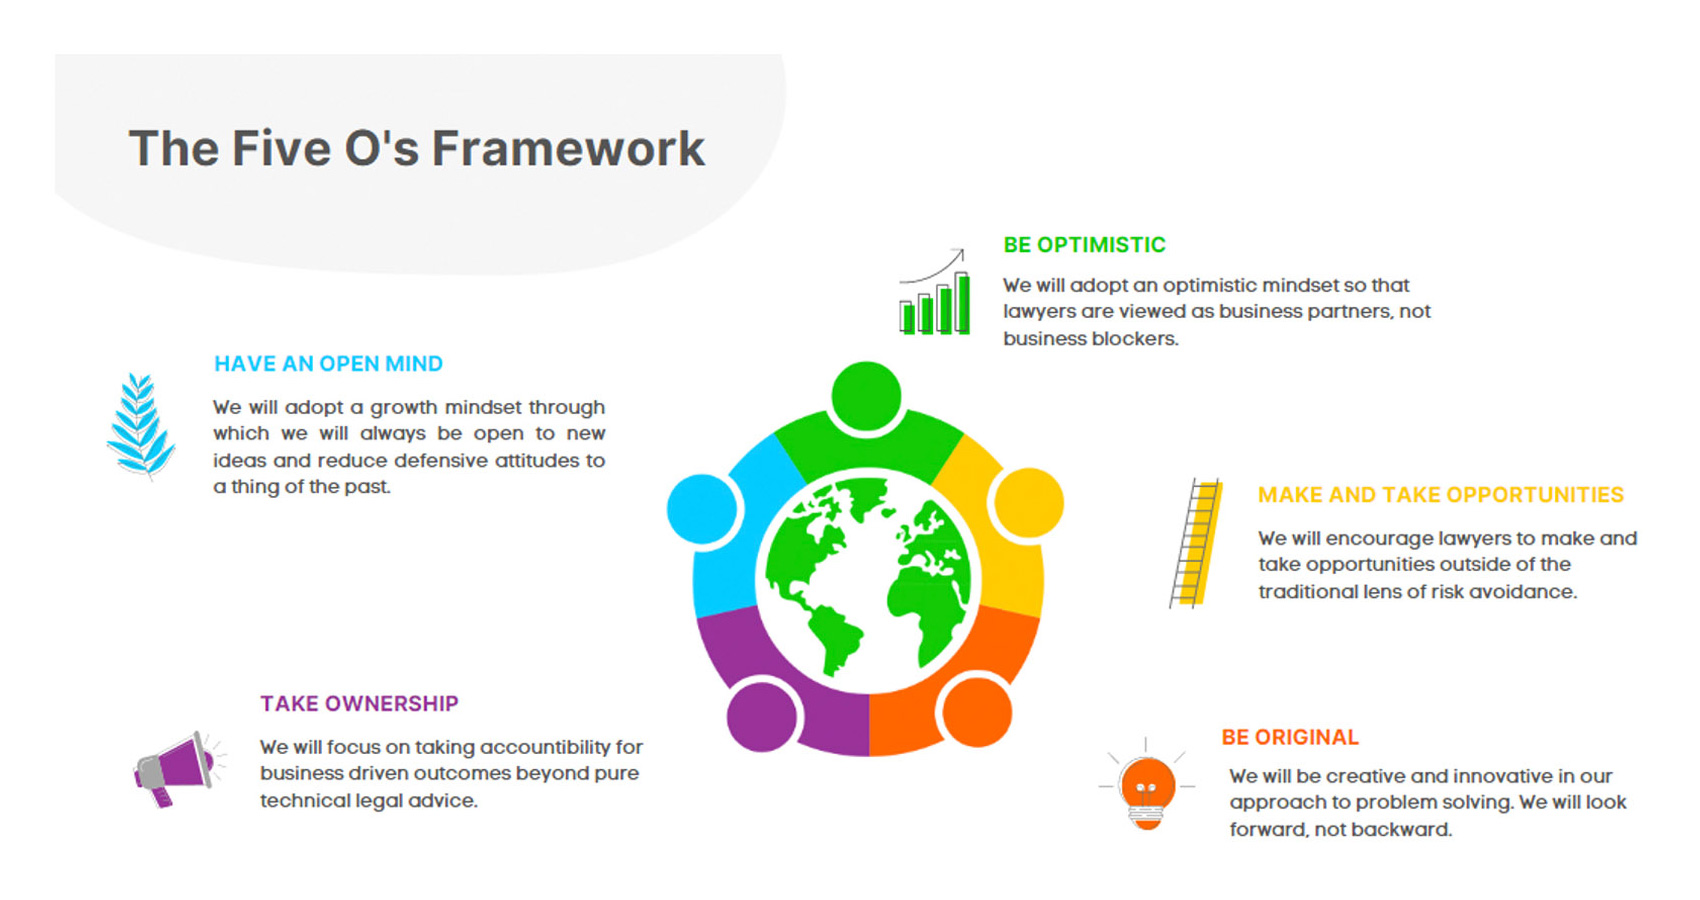 The Five O's framework